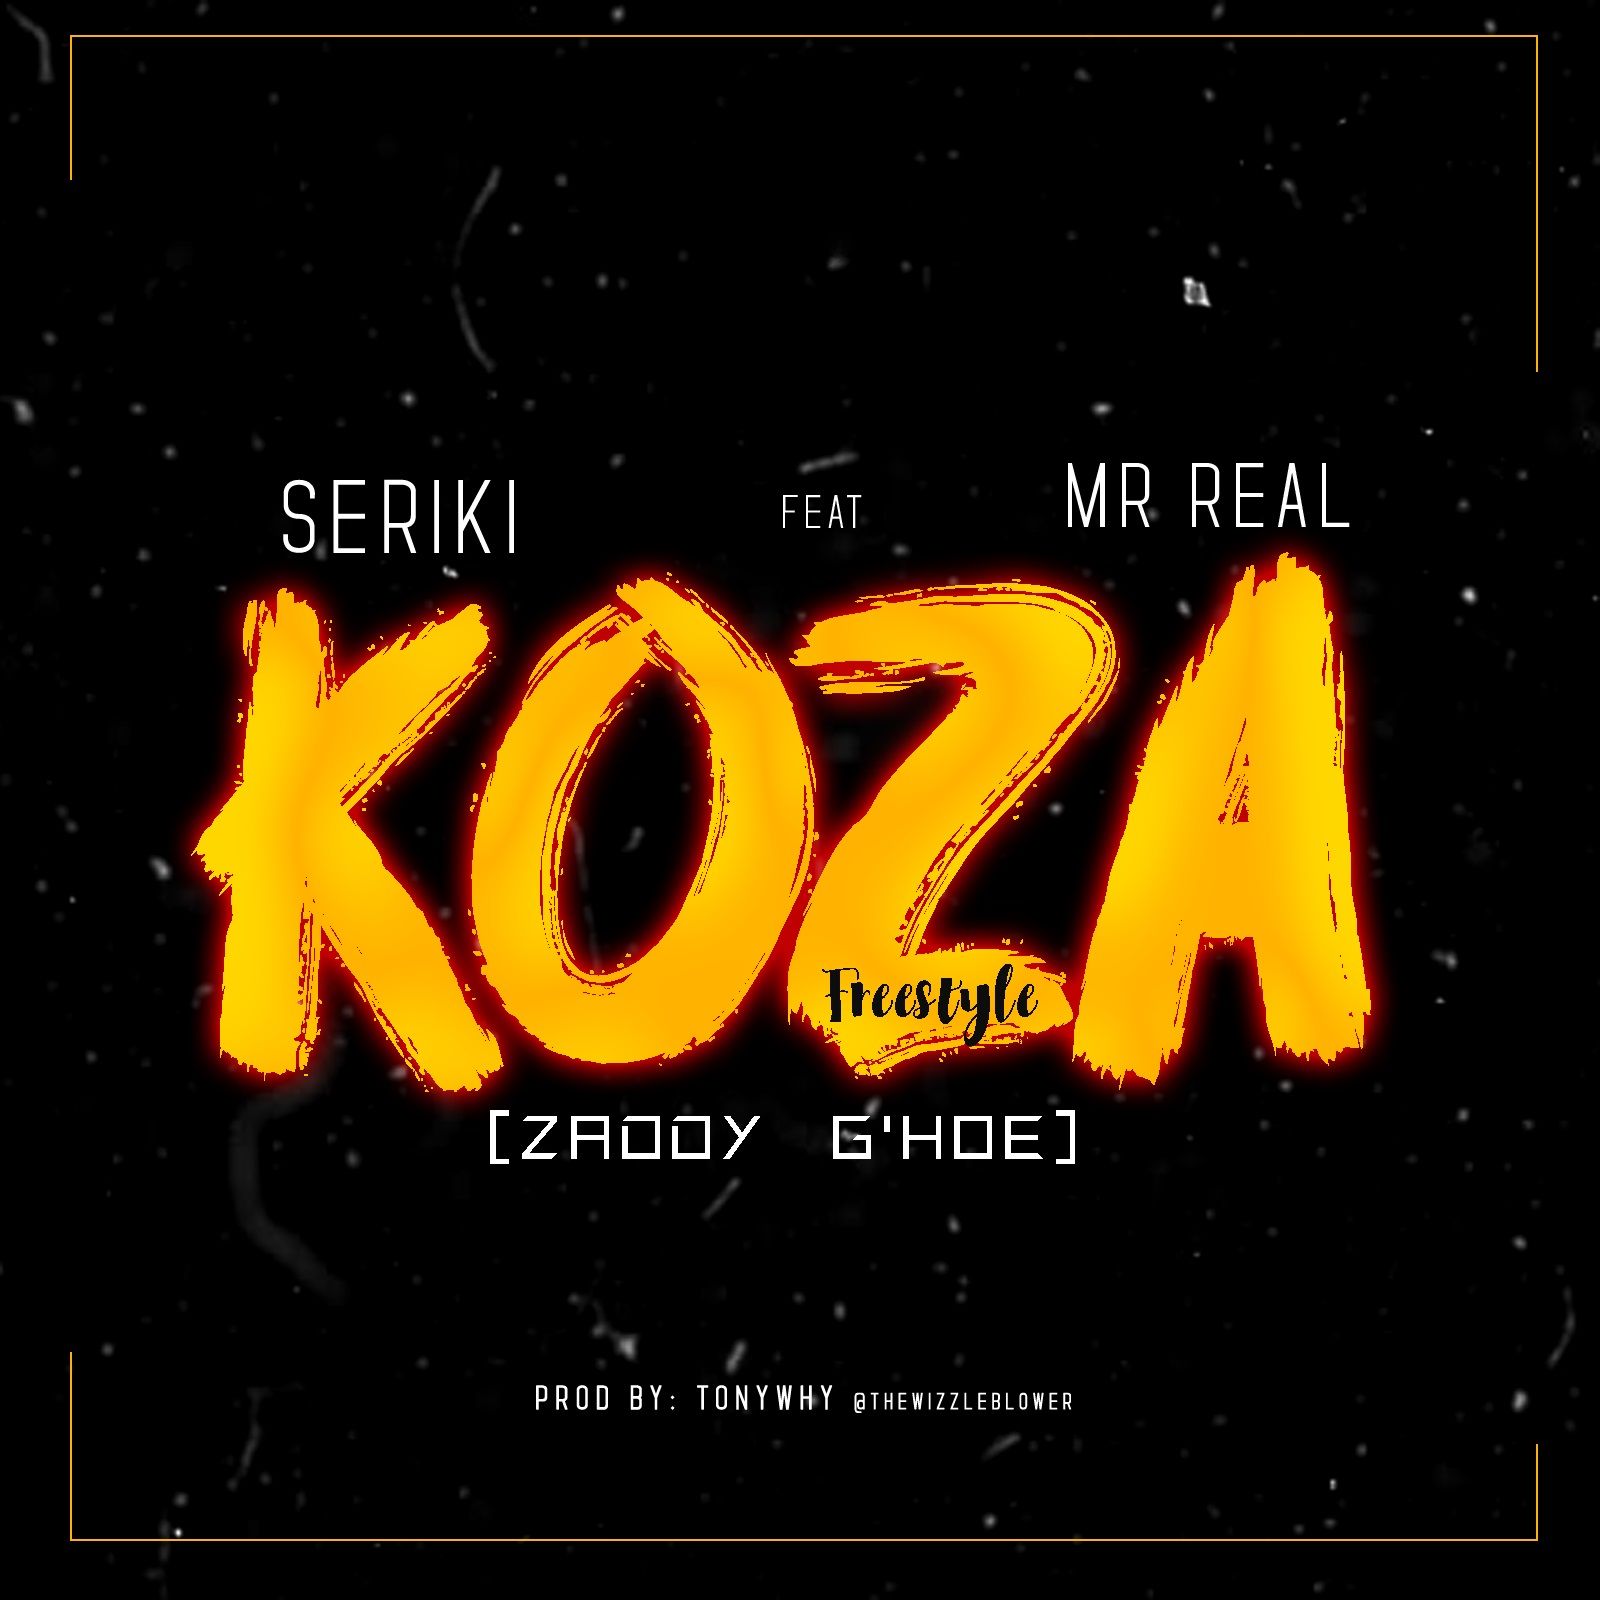 Seriki ft. Mr. Real - KOZA (Zaddy G'Hoe ~ Freestyle) Artwork | AceWorldTeam.com